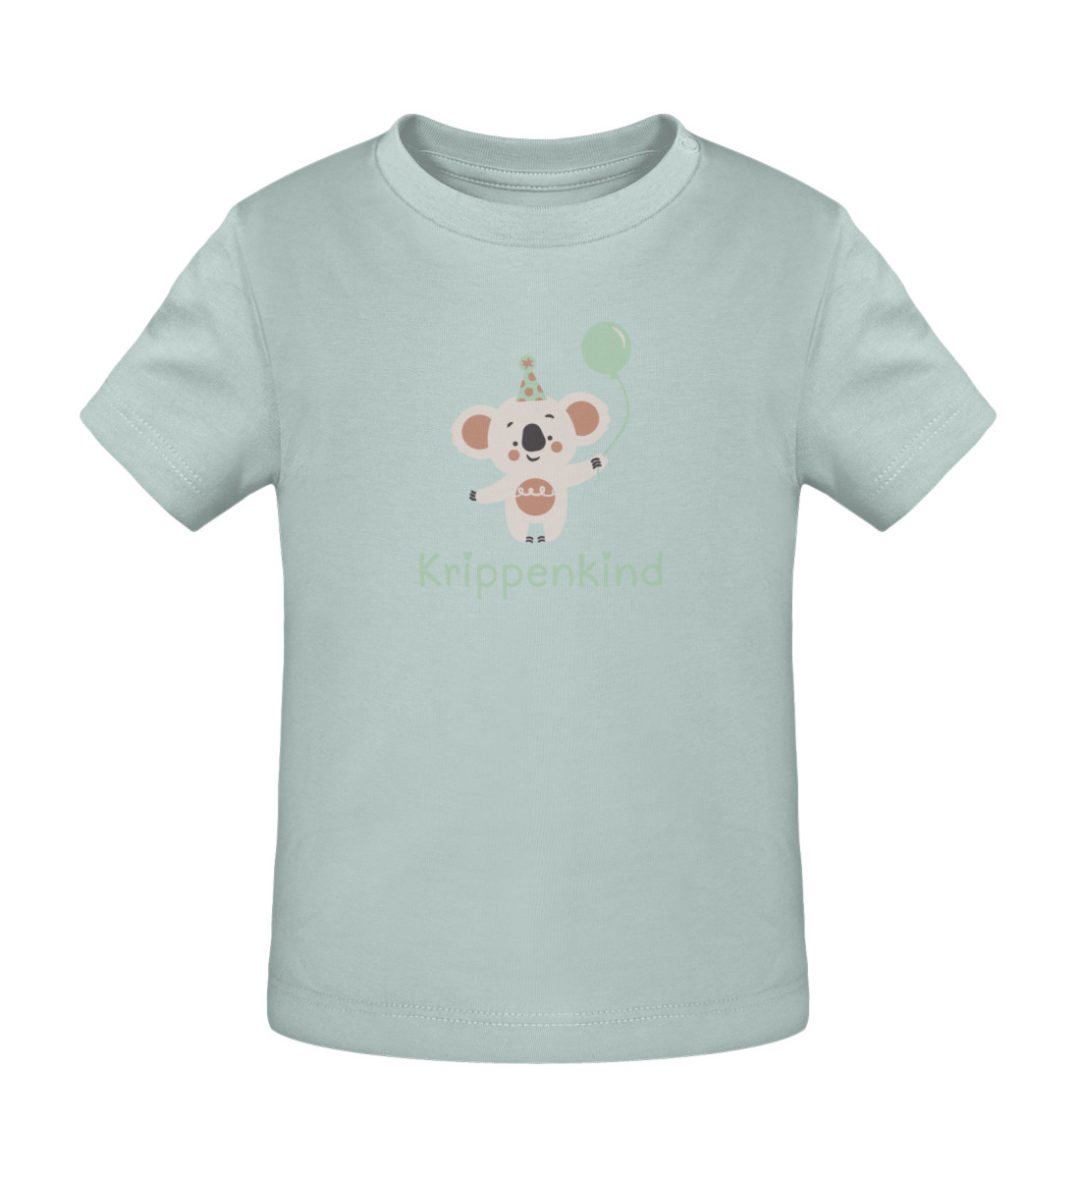 Krippenkind - Baby Creator T-Shirt ST/ST-7033